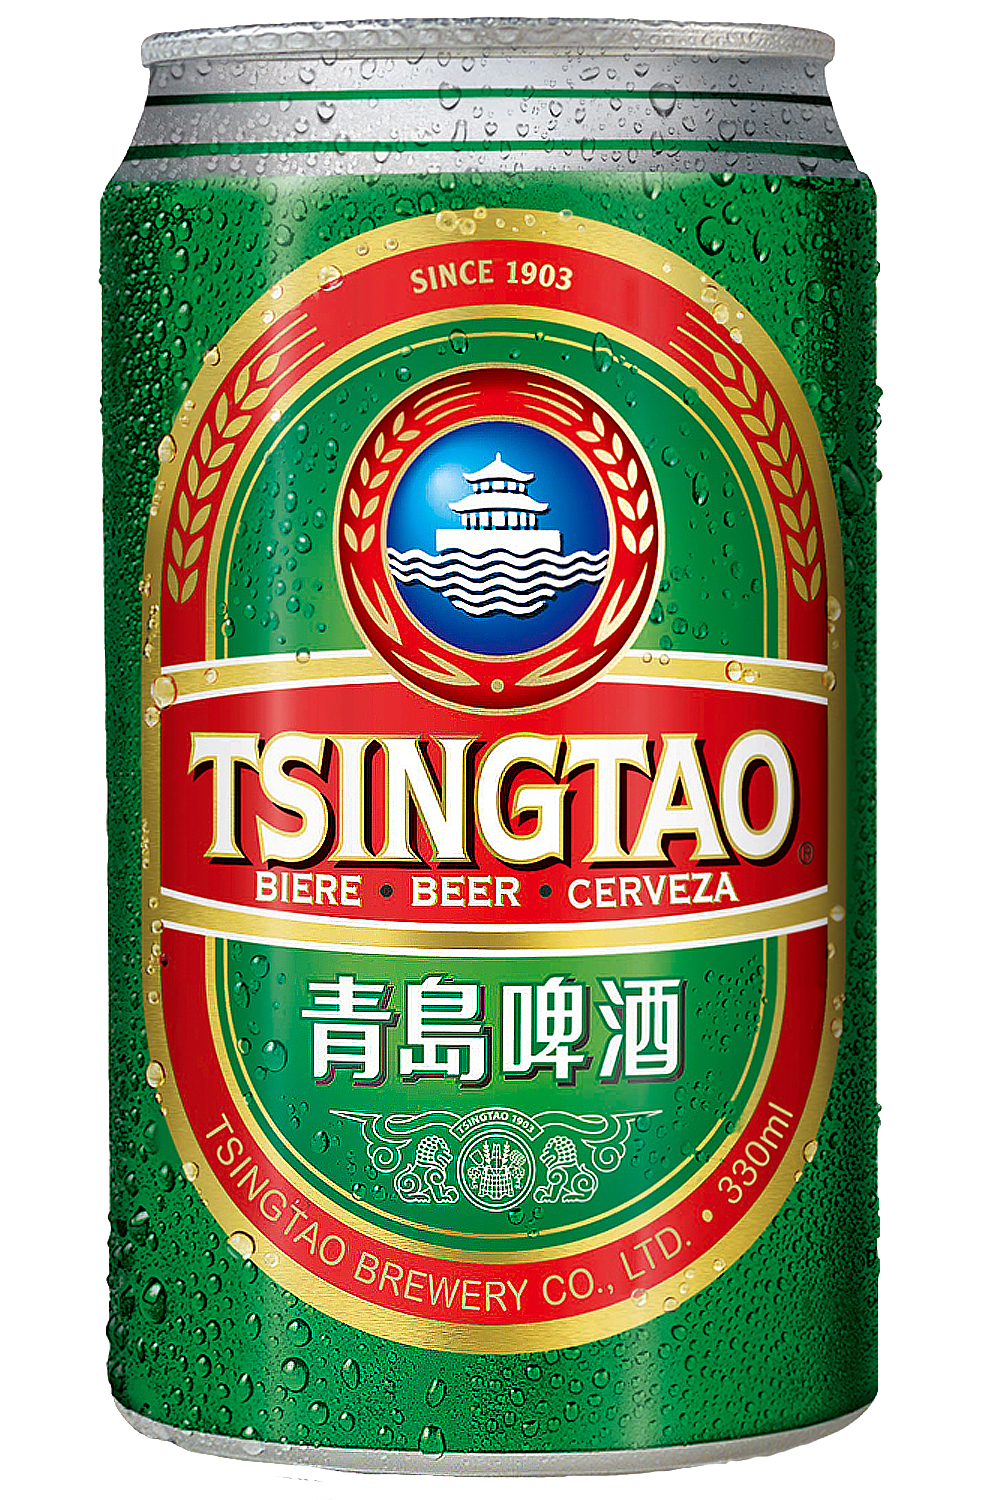 Пиво по китайски. Китайское пиво Тсингтао. Пиво Tsingtao светлое. Китайское пиво Циндао. Пиво Циндао светлое.